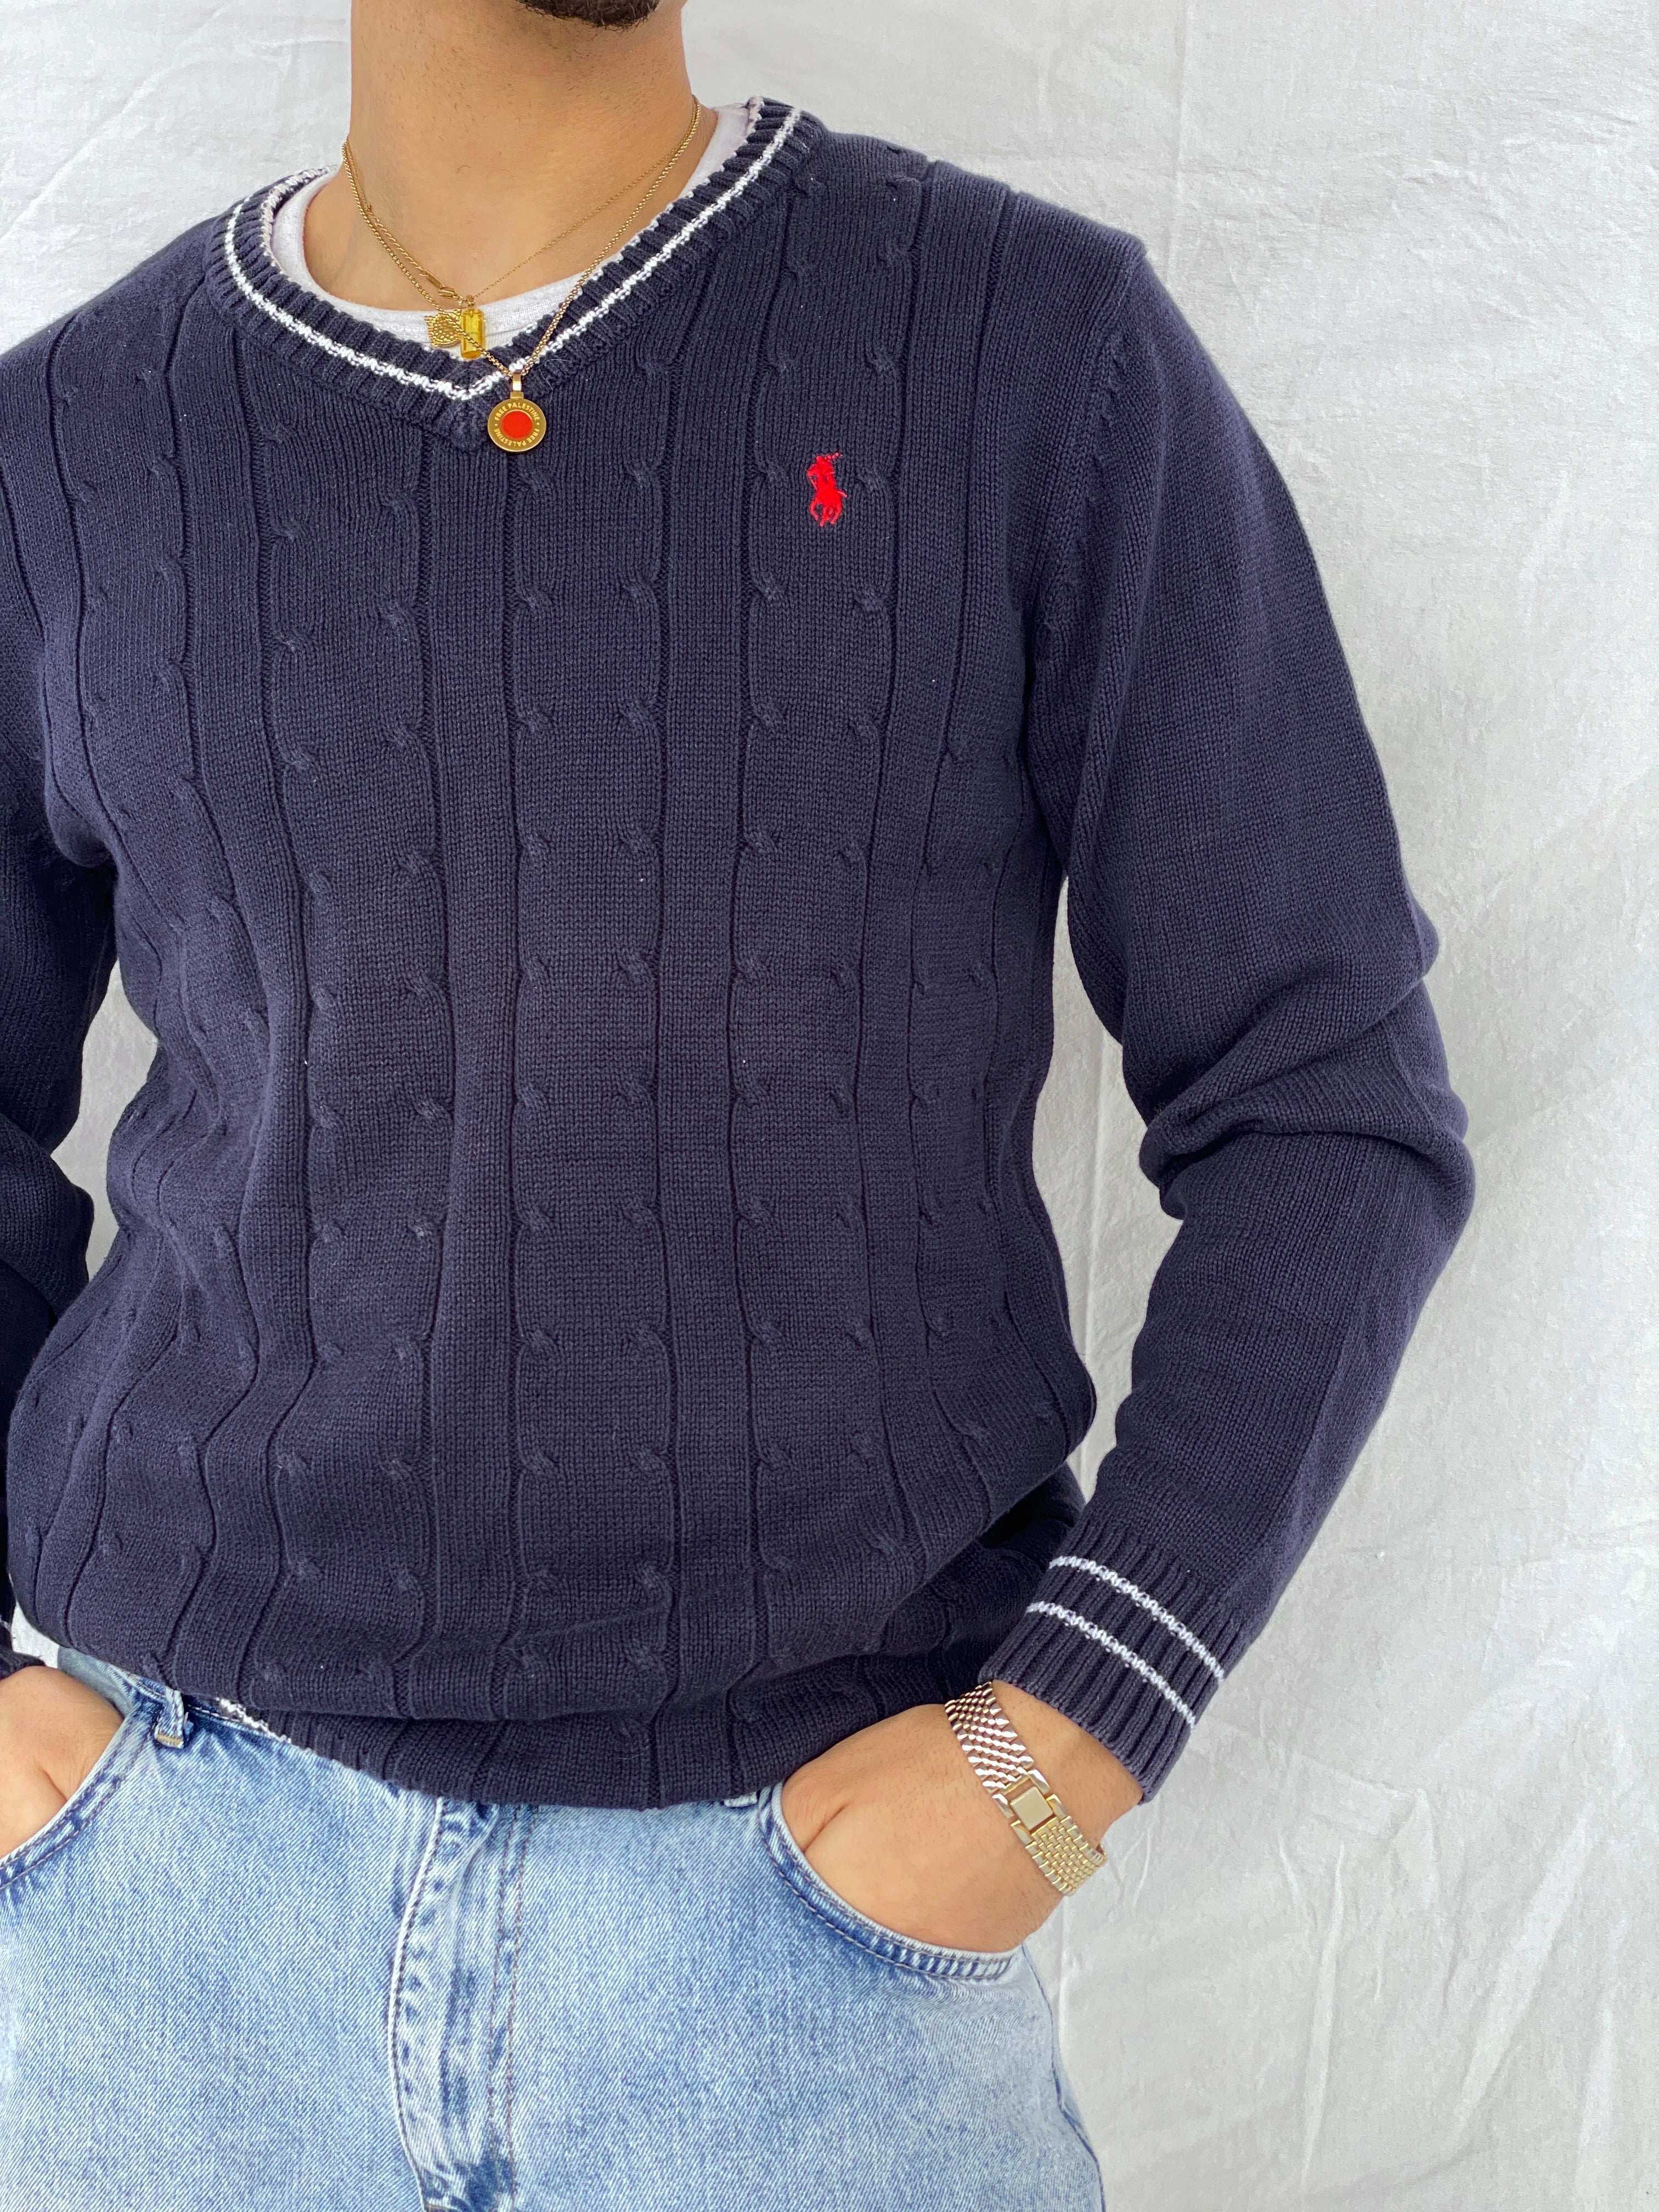 Polo By Ralph Lauren Navy Sweater - Size XL - Balagan Vintage Sweater 00s, 90s, Abdullah, knitted sweater, ralph lauren, winter